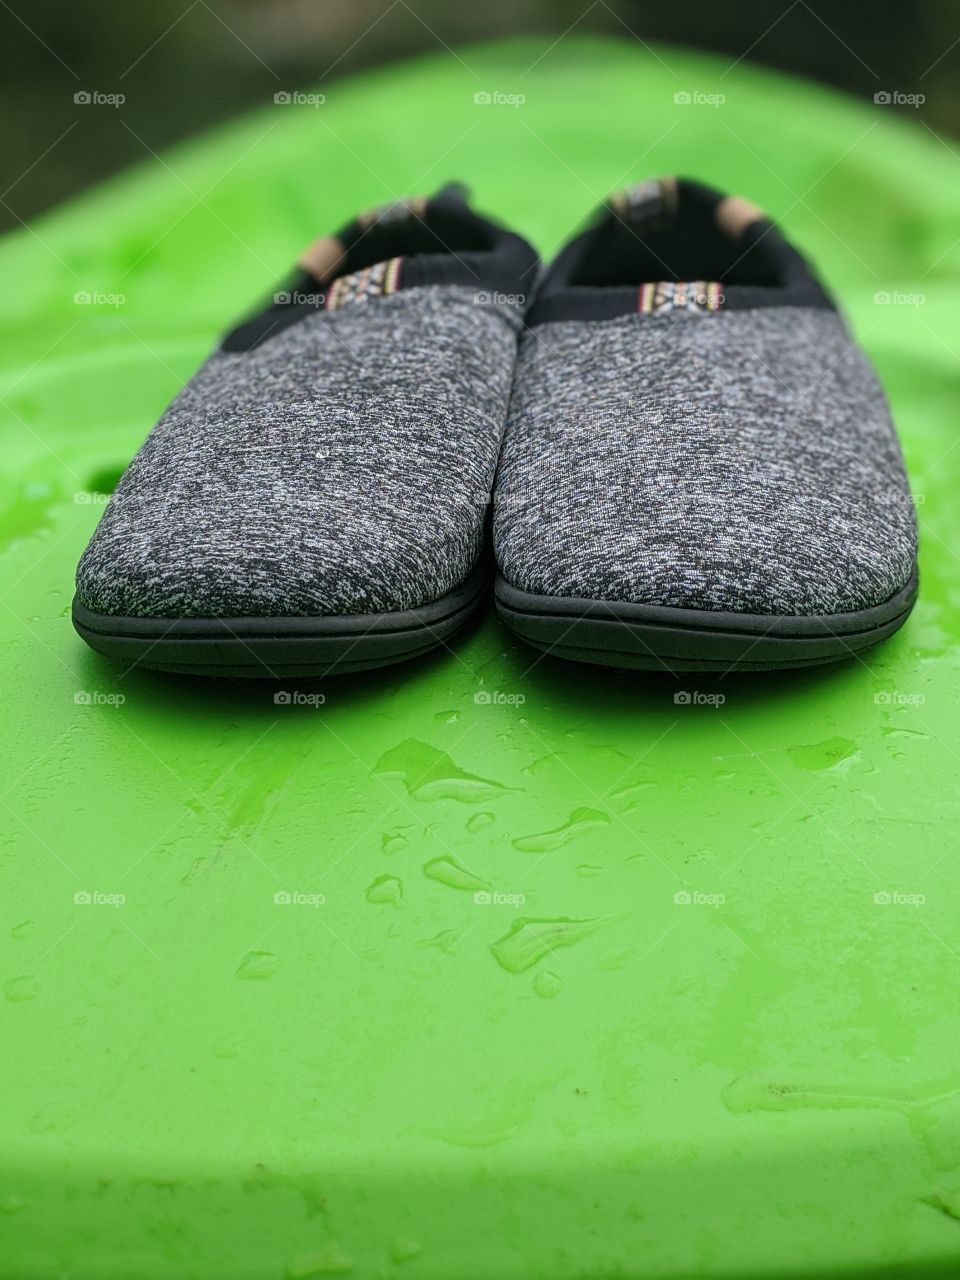 Acorn slippers